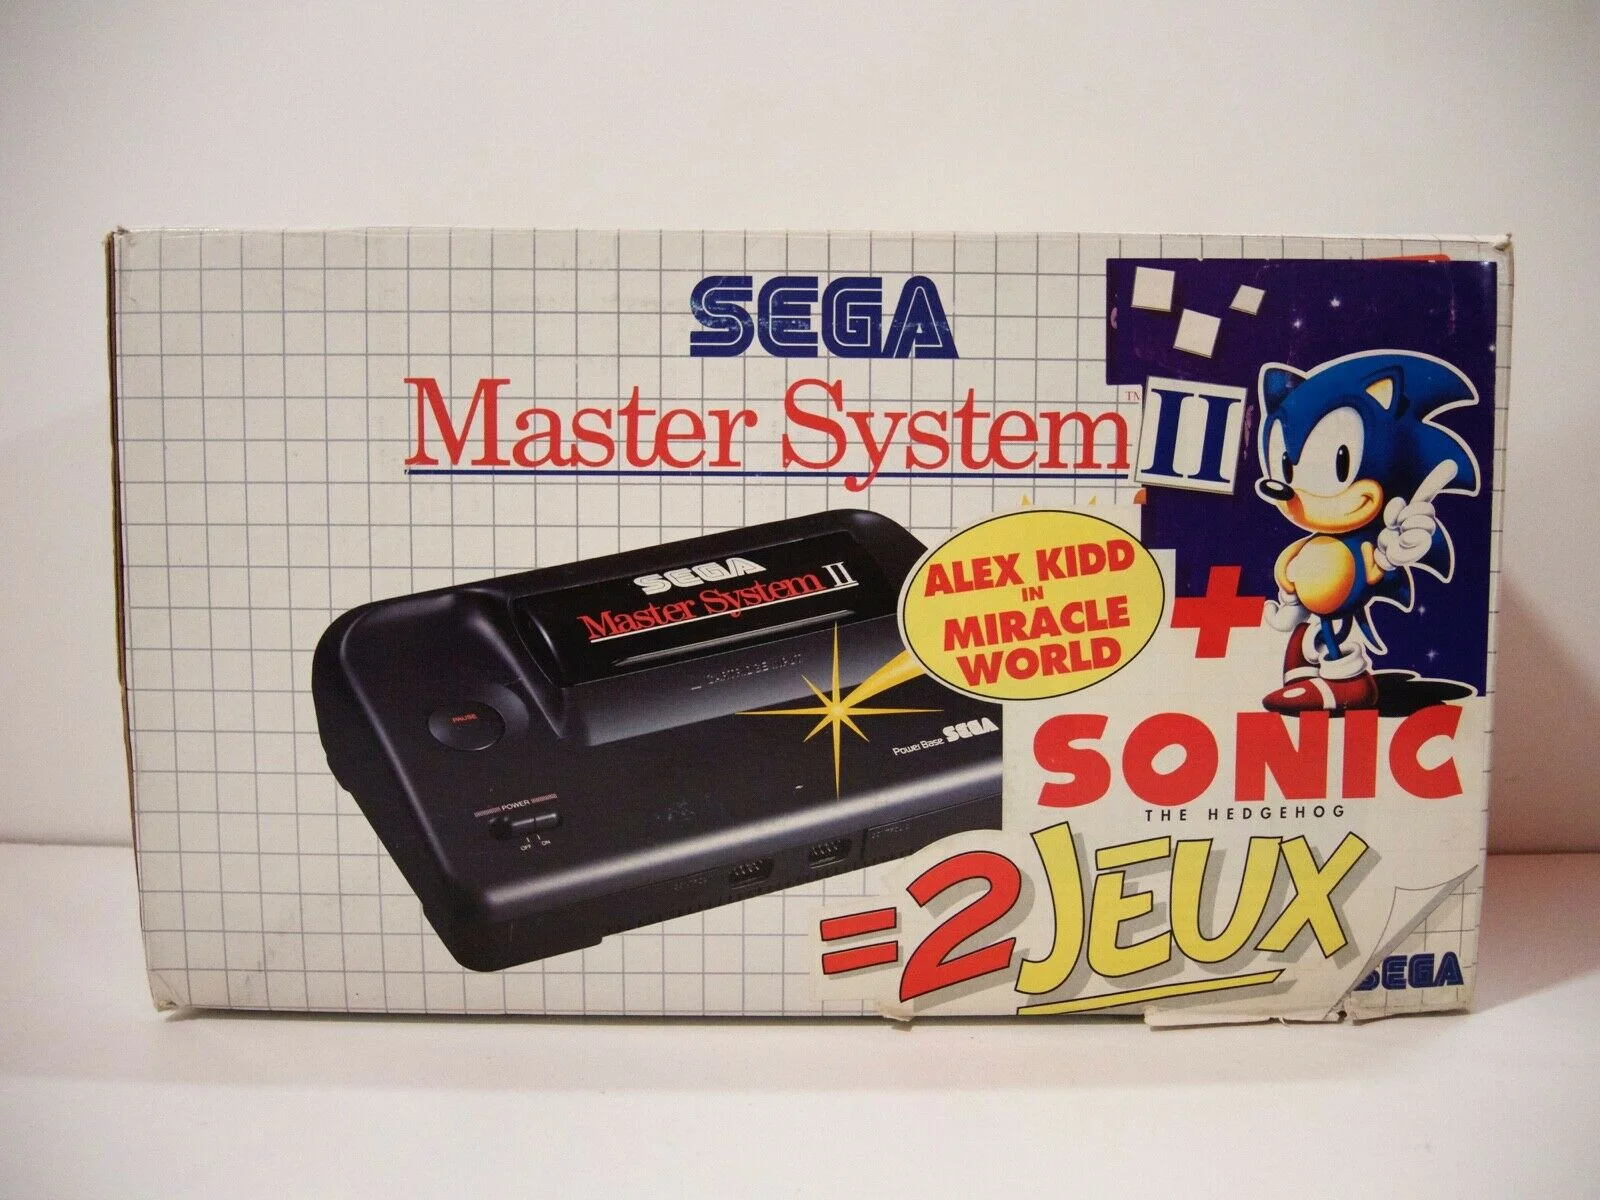  Sega Master System II Alex Kidd in Miracle World + Sonic the Hedgehog Bundle